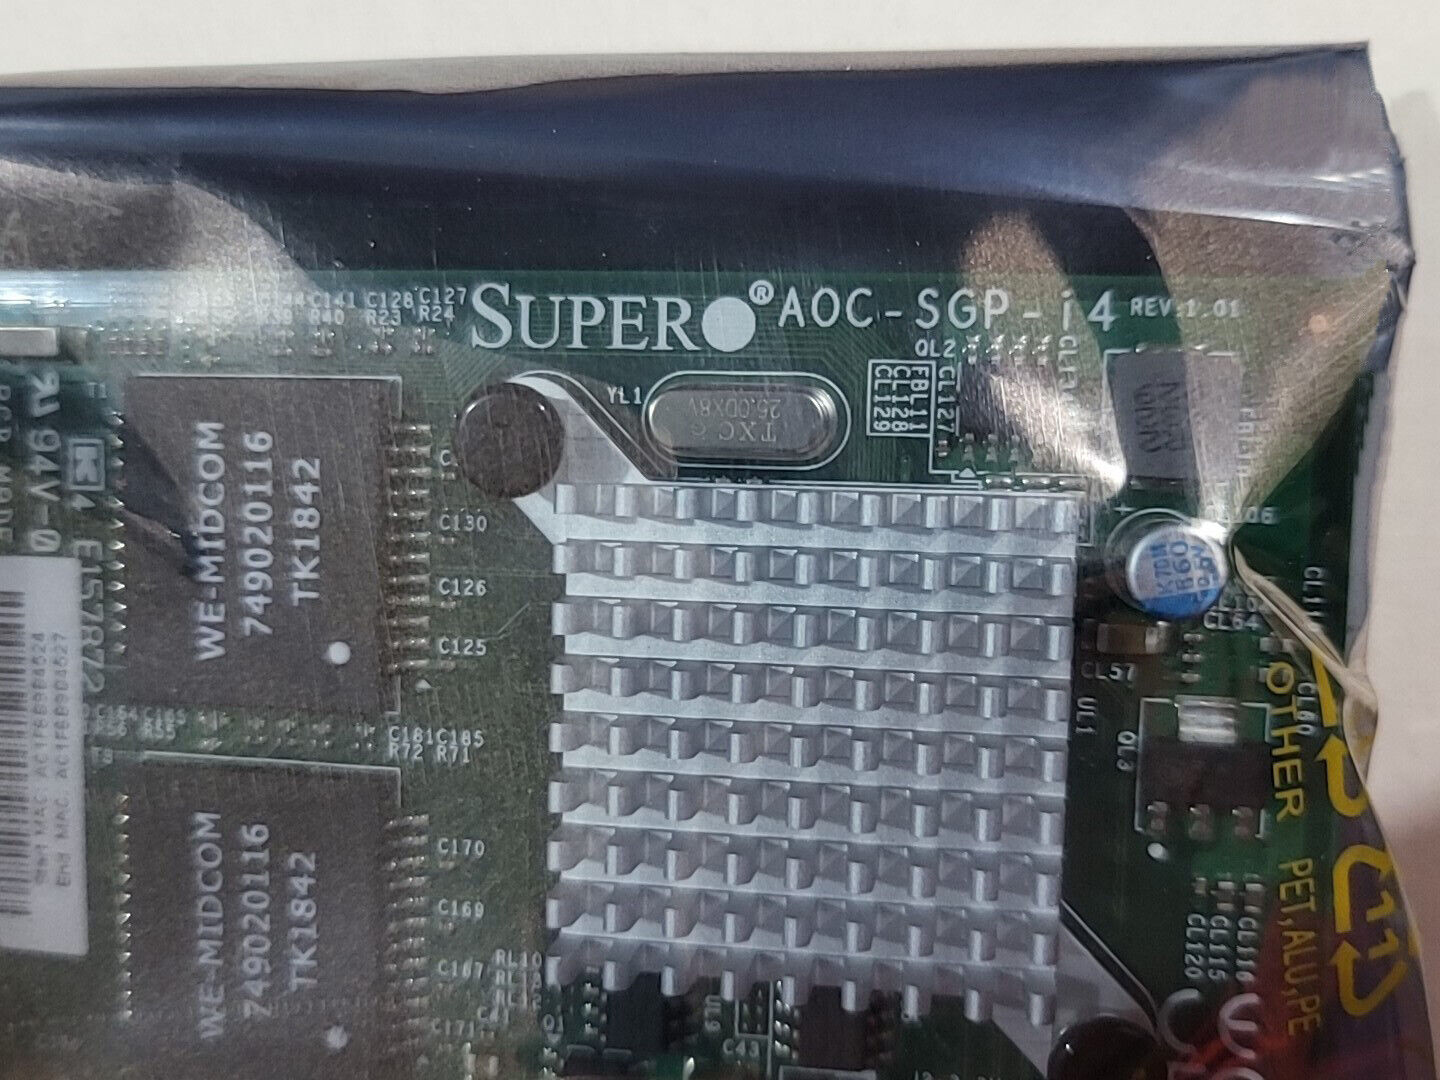 SUPERMICRO AOC-SGP-I4 (INTEL I350-T4V2) QUAD PORT Gigabit NIC w/BOTH BRACKETS